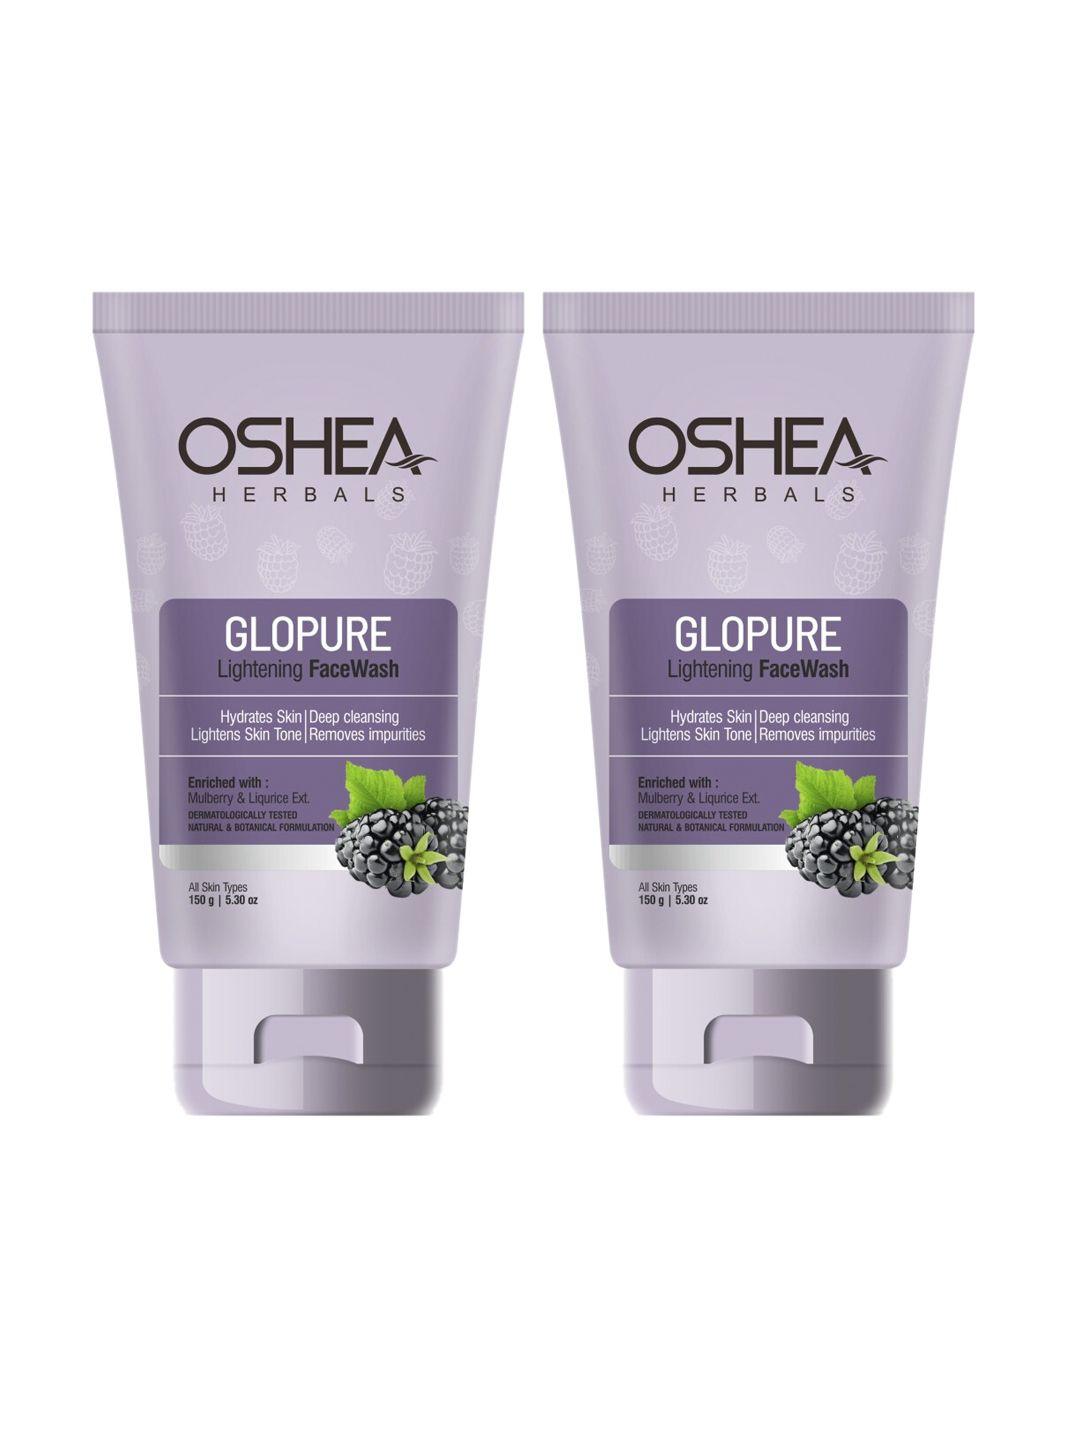 oshea herbals glopure lightening face wash combo 300 gm